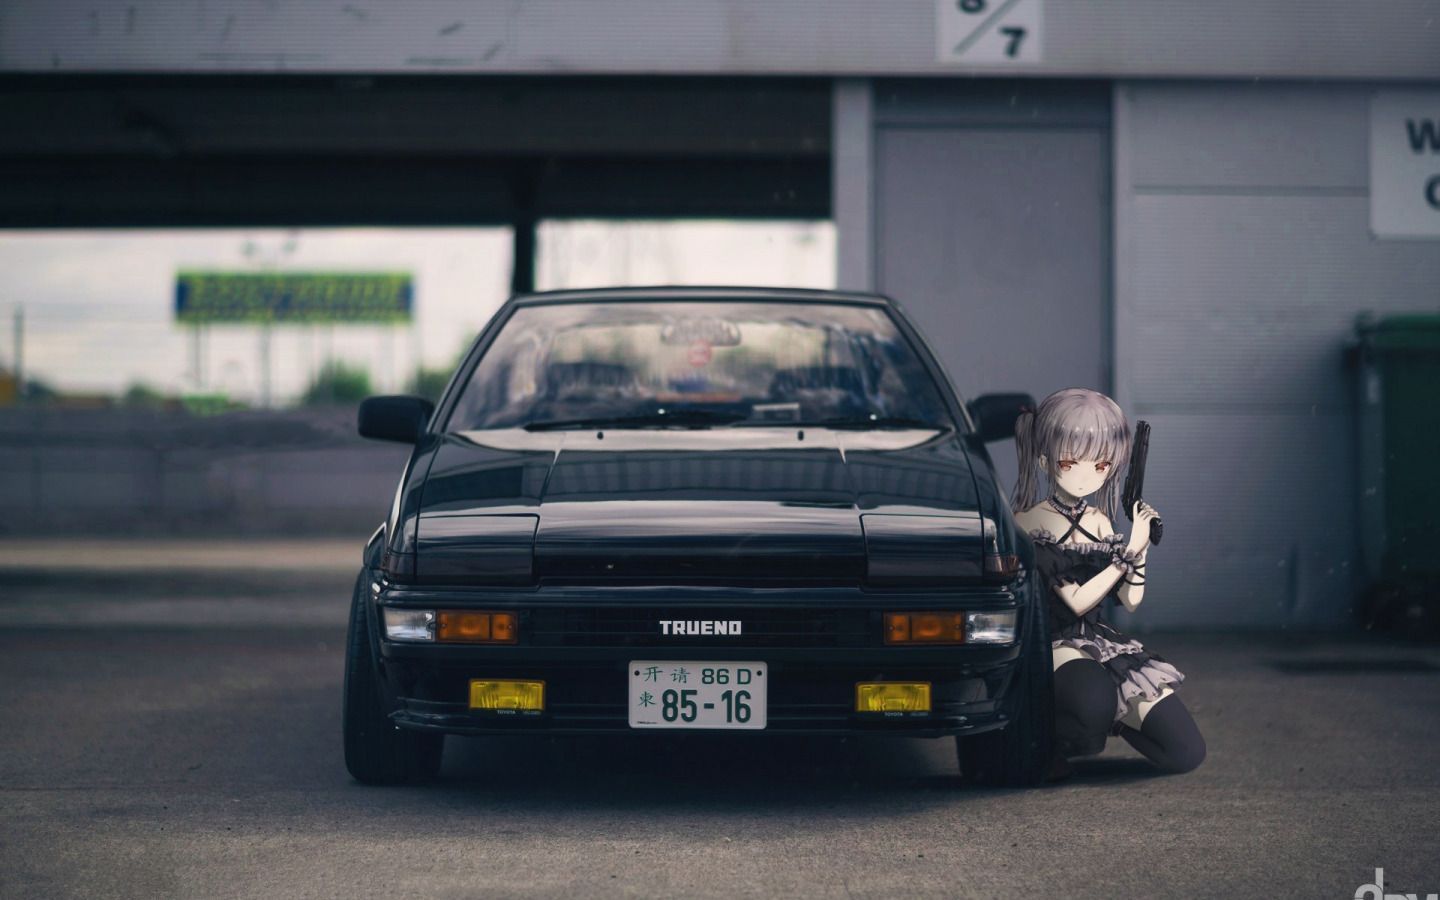 Anime girl with a gun and a car - Toyota AE86